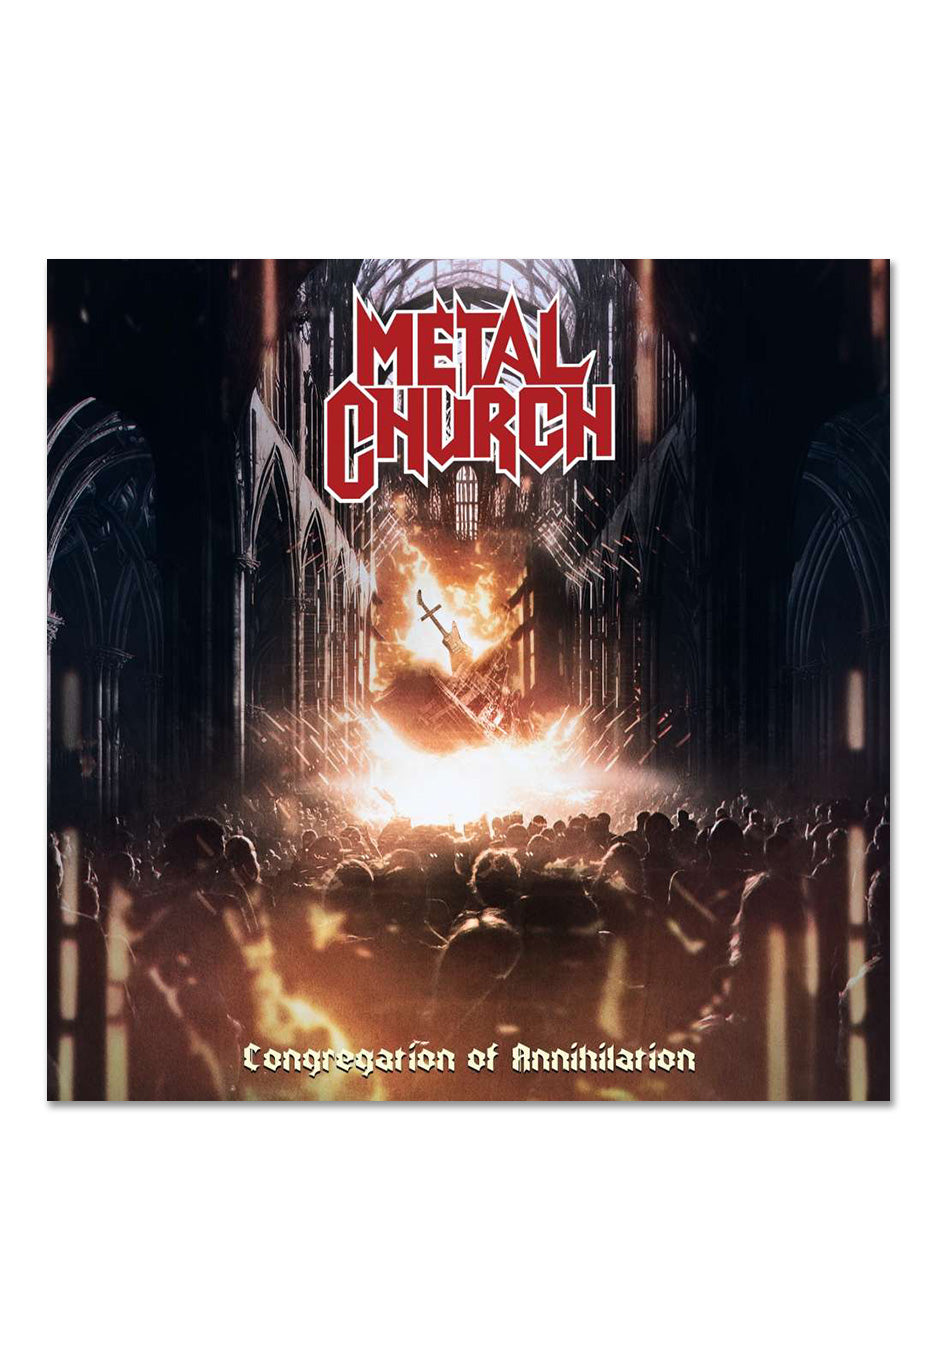 Metal Church - Congregation Of Annihilation Ltd. - Picture Vinyl